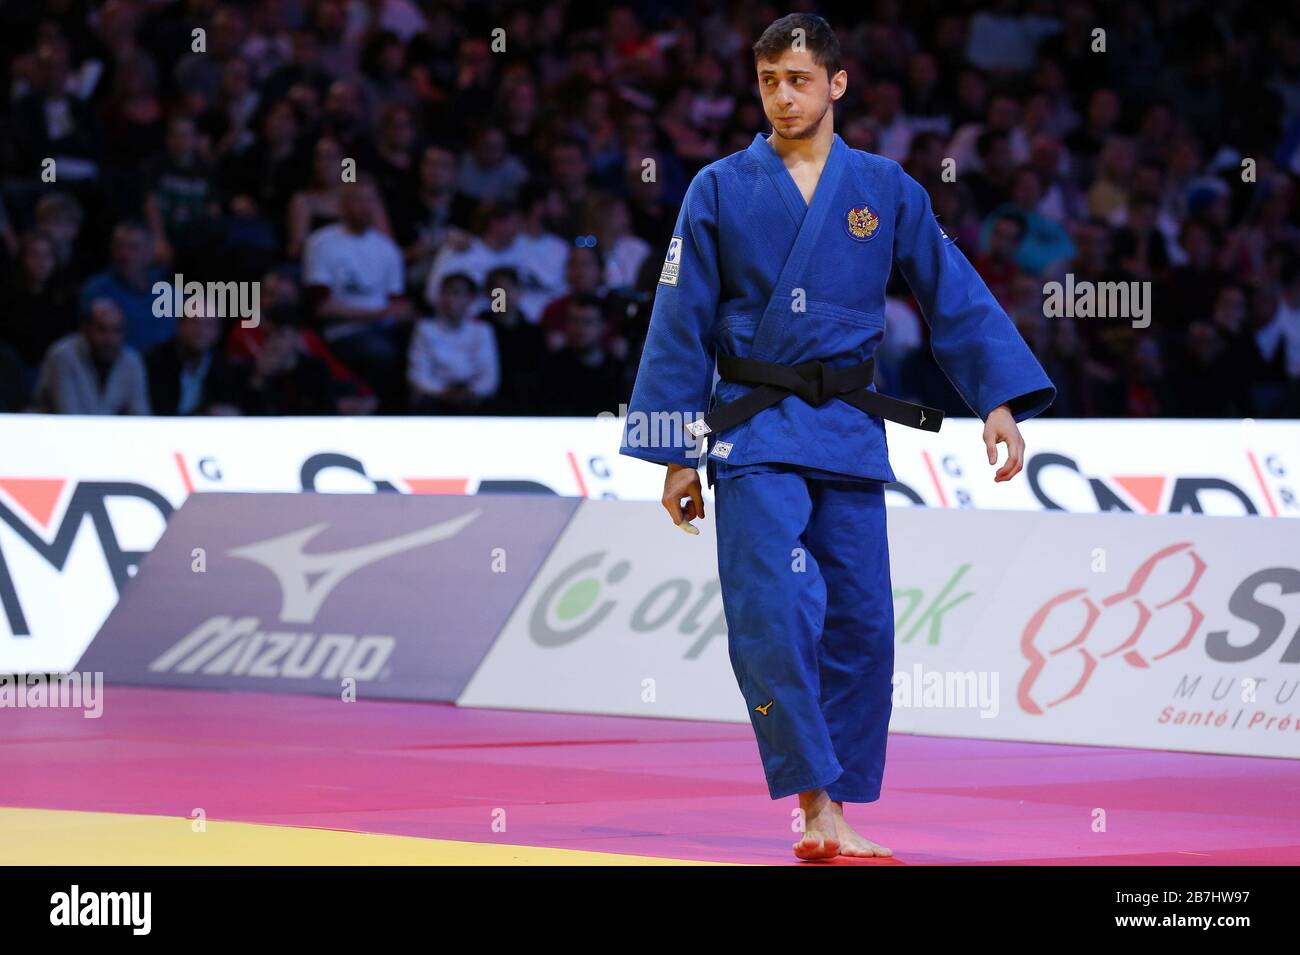 Paris, France - 08th Feb, 2020: Ryuju Nagayama for Japan against Yago Abuladze for Russia, Men's -60kg, Gold Medal Match (Credit: Mickael Chavet) Stock Photo